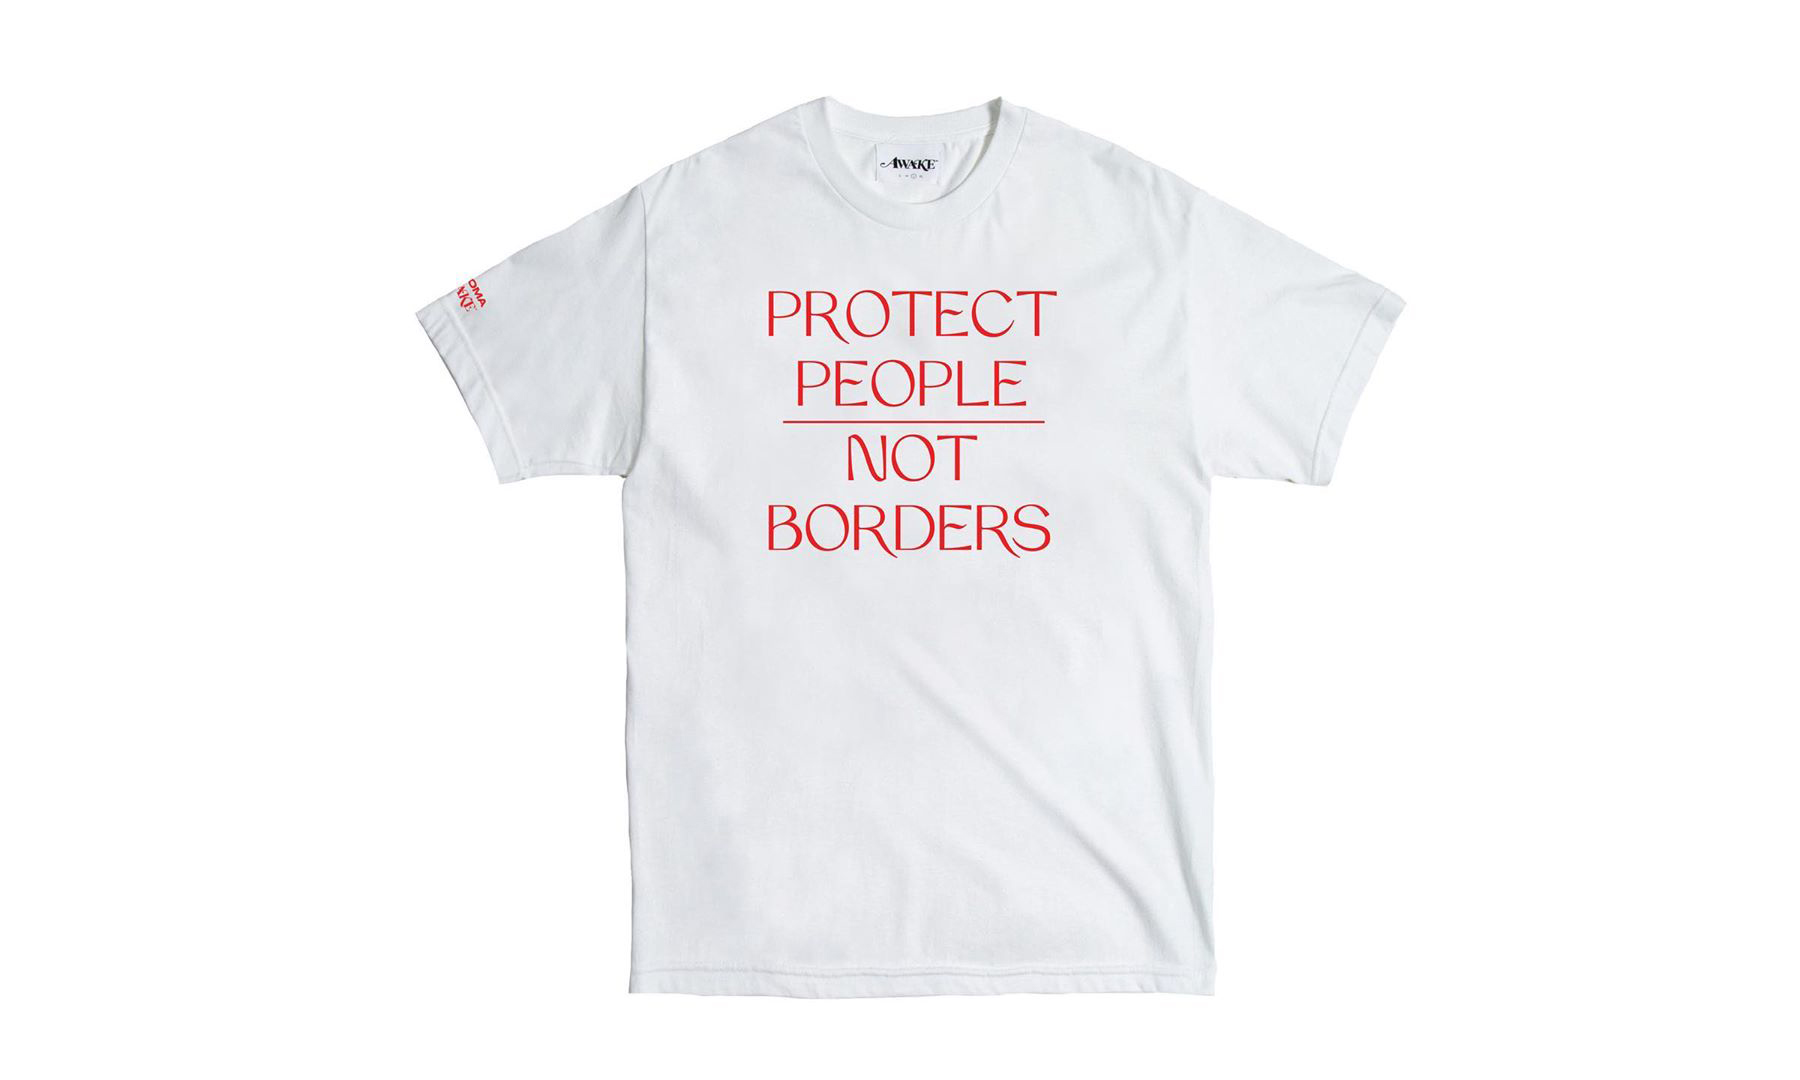 AWAKE NY 打造慈善 T-Shirt 帮助美墨边境移民